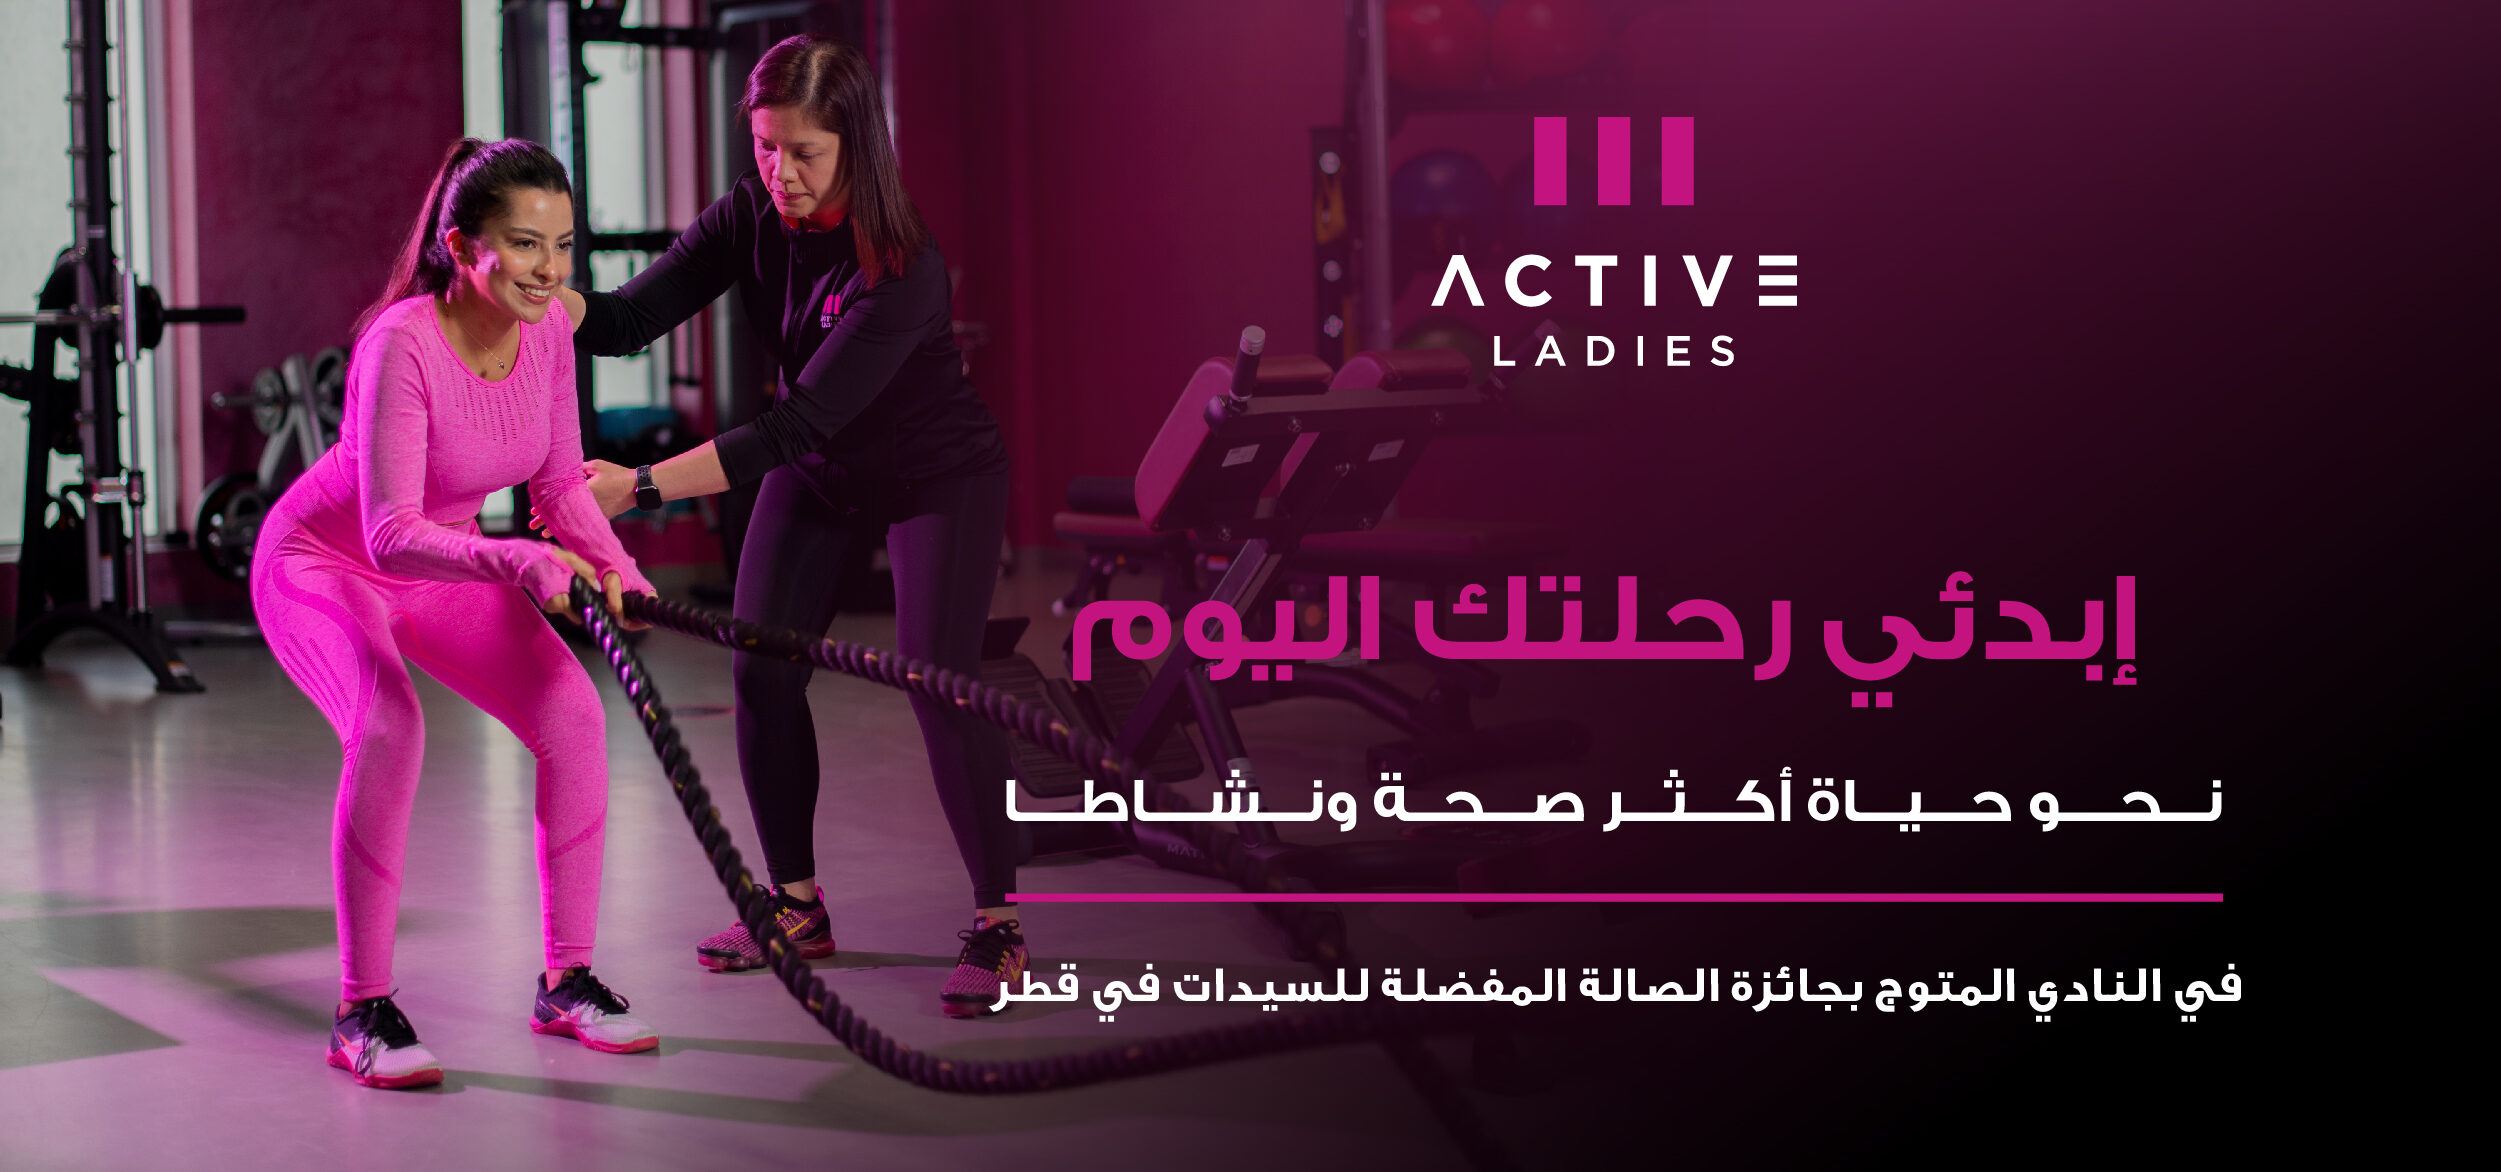 M Active Ladies